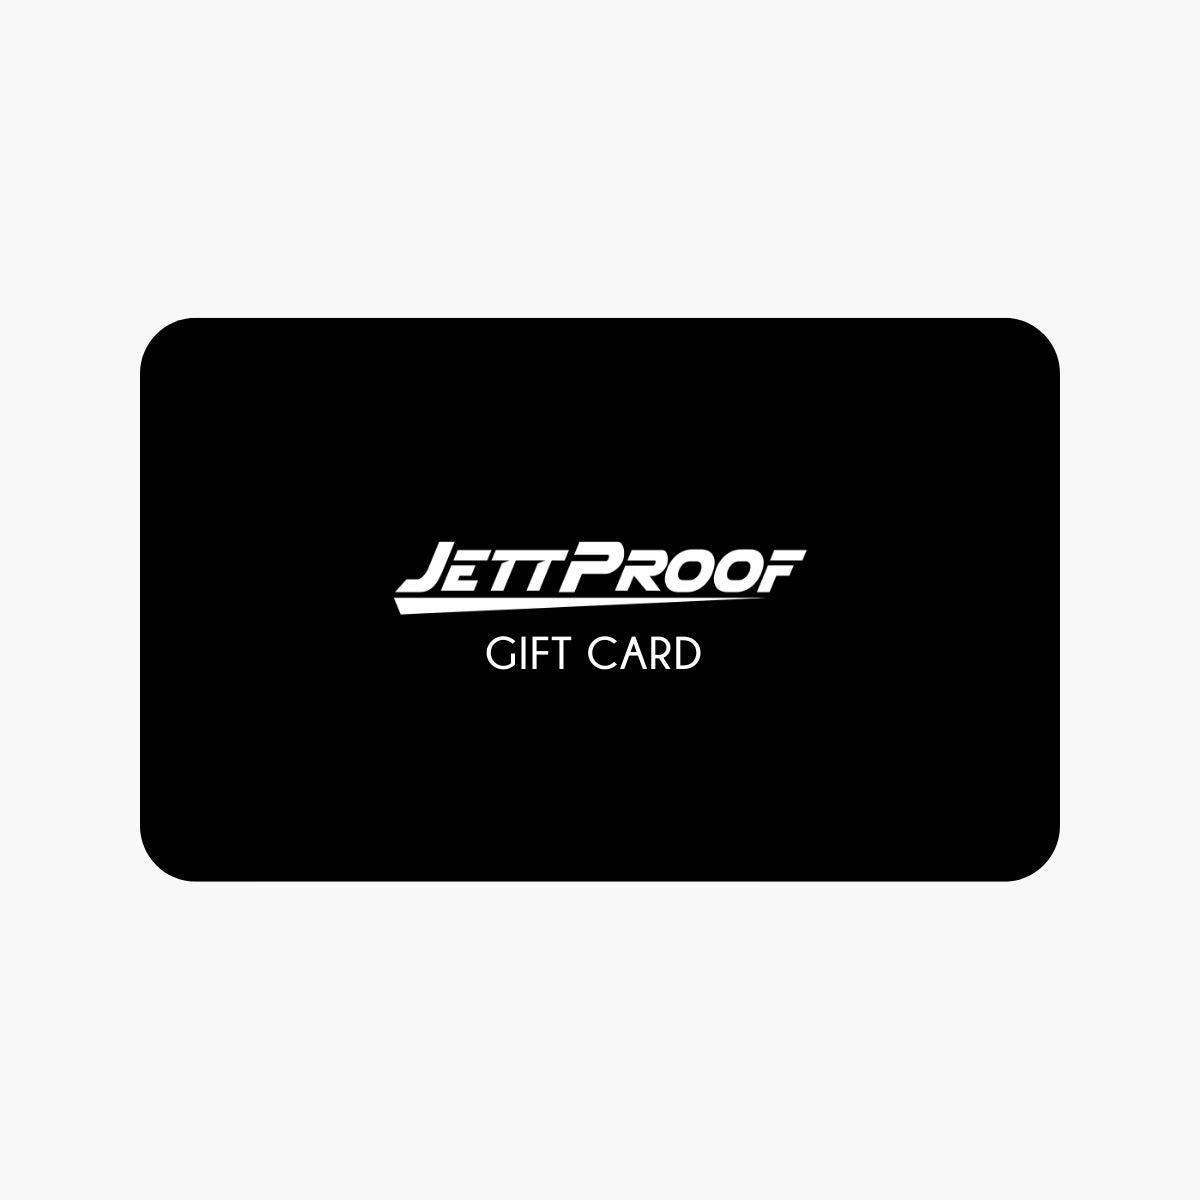 JettProof Gift Card